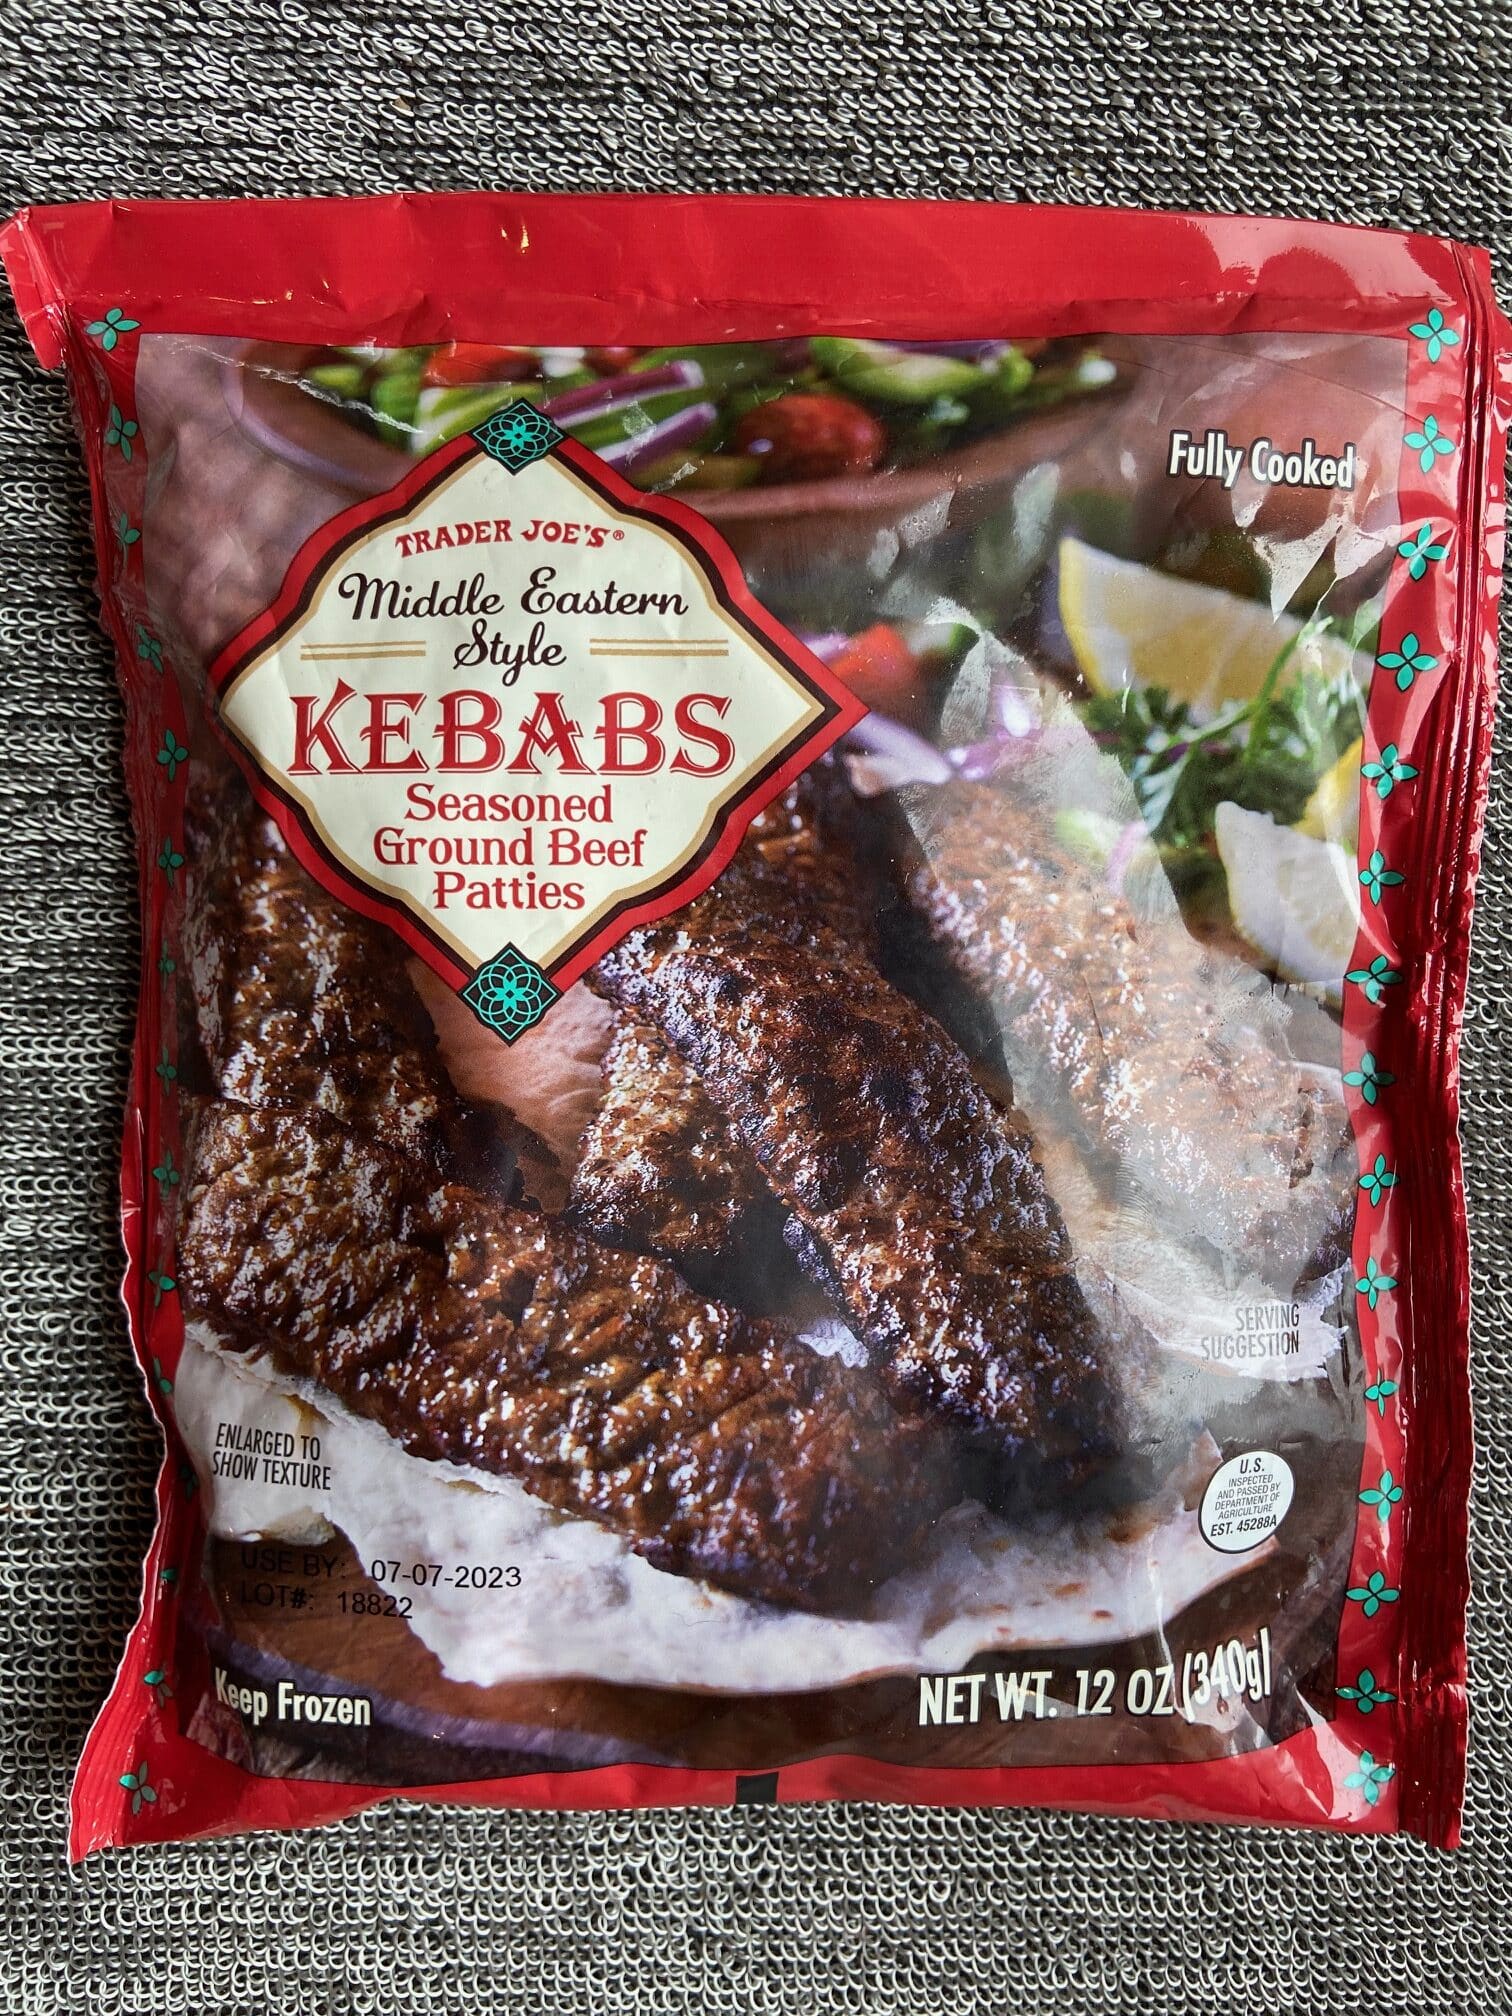 Trader Joe's Middle Eastern Style Kebabs